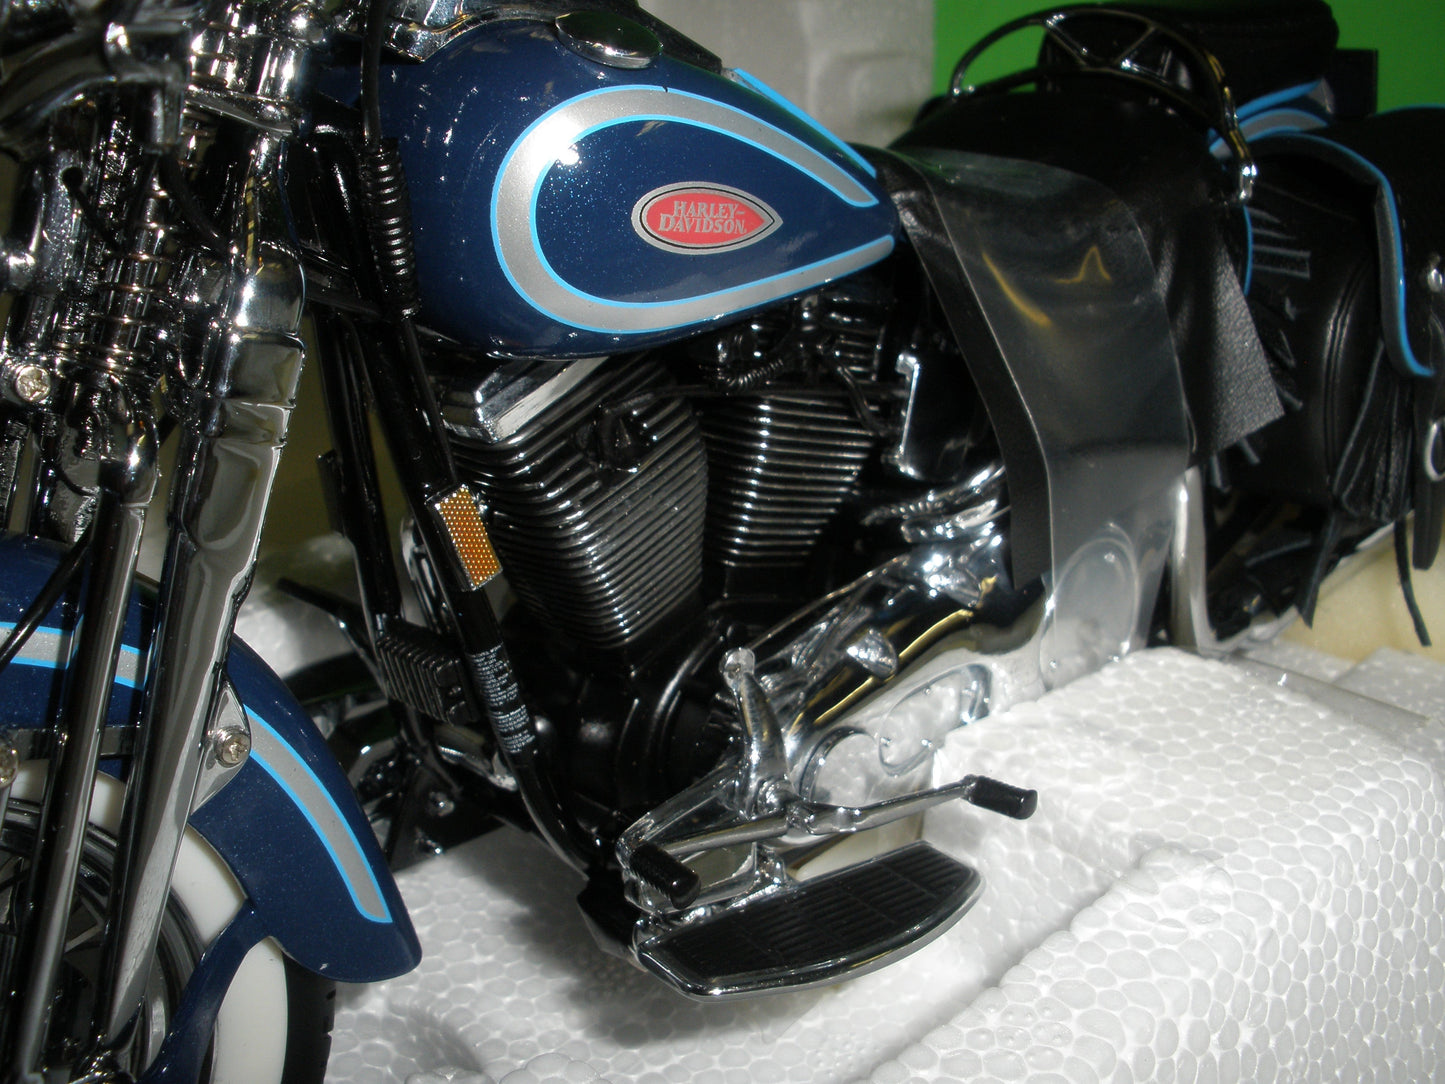 Harley Davidson Heritage Springer Motorcycle - B11YF03